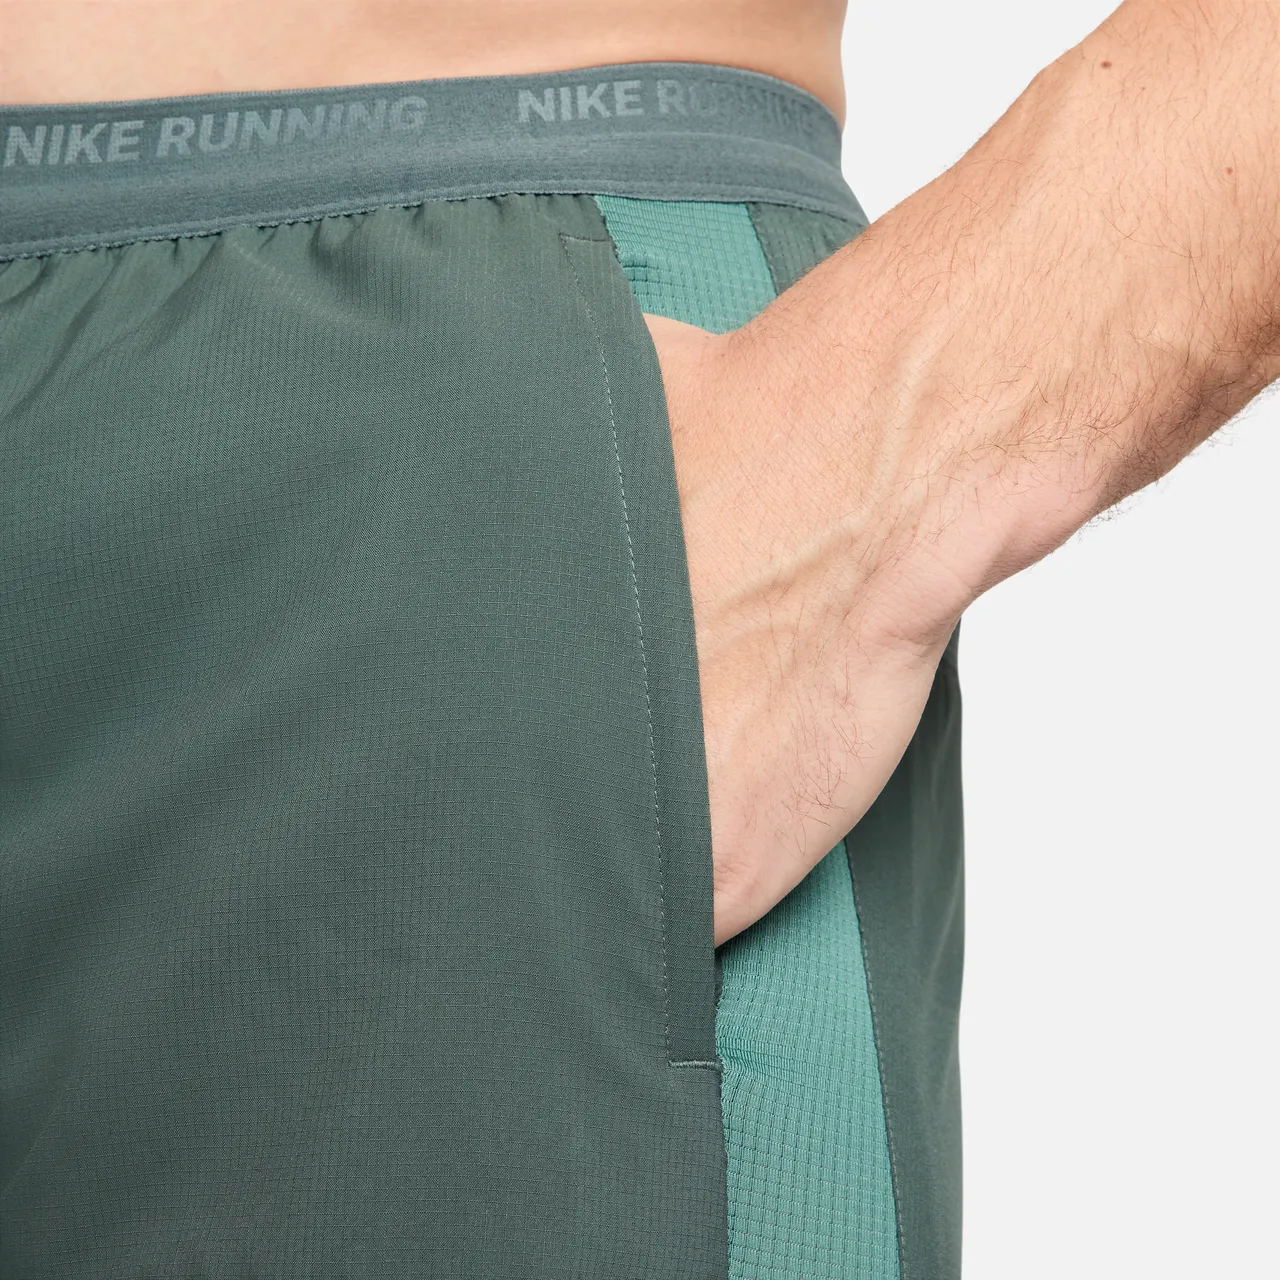 Nike Stride Men's Dri-FIT 13cm (approx.) Hybrid Running Shorts - Green - Polyester